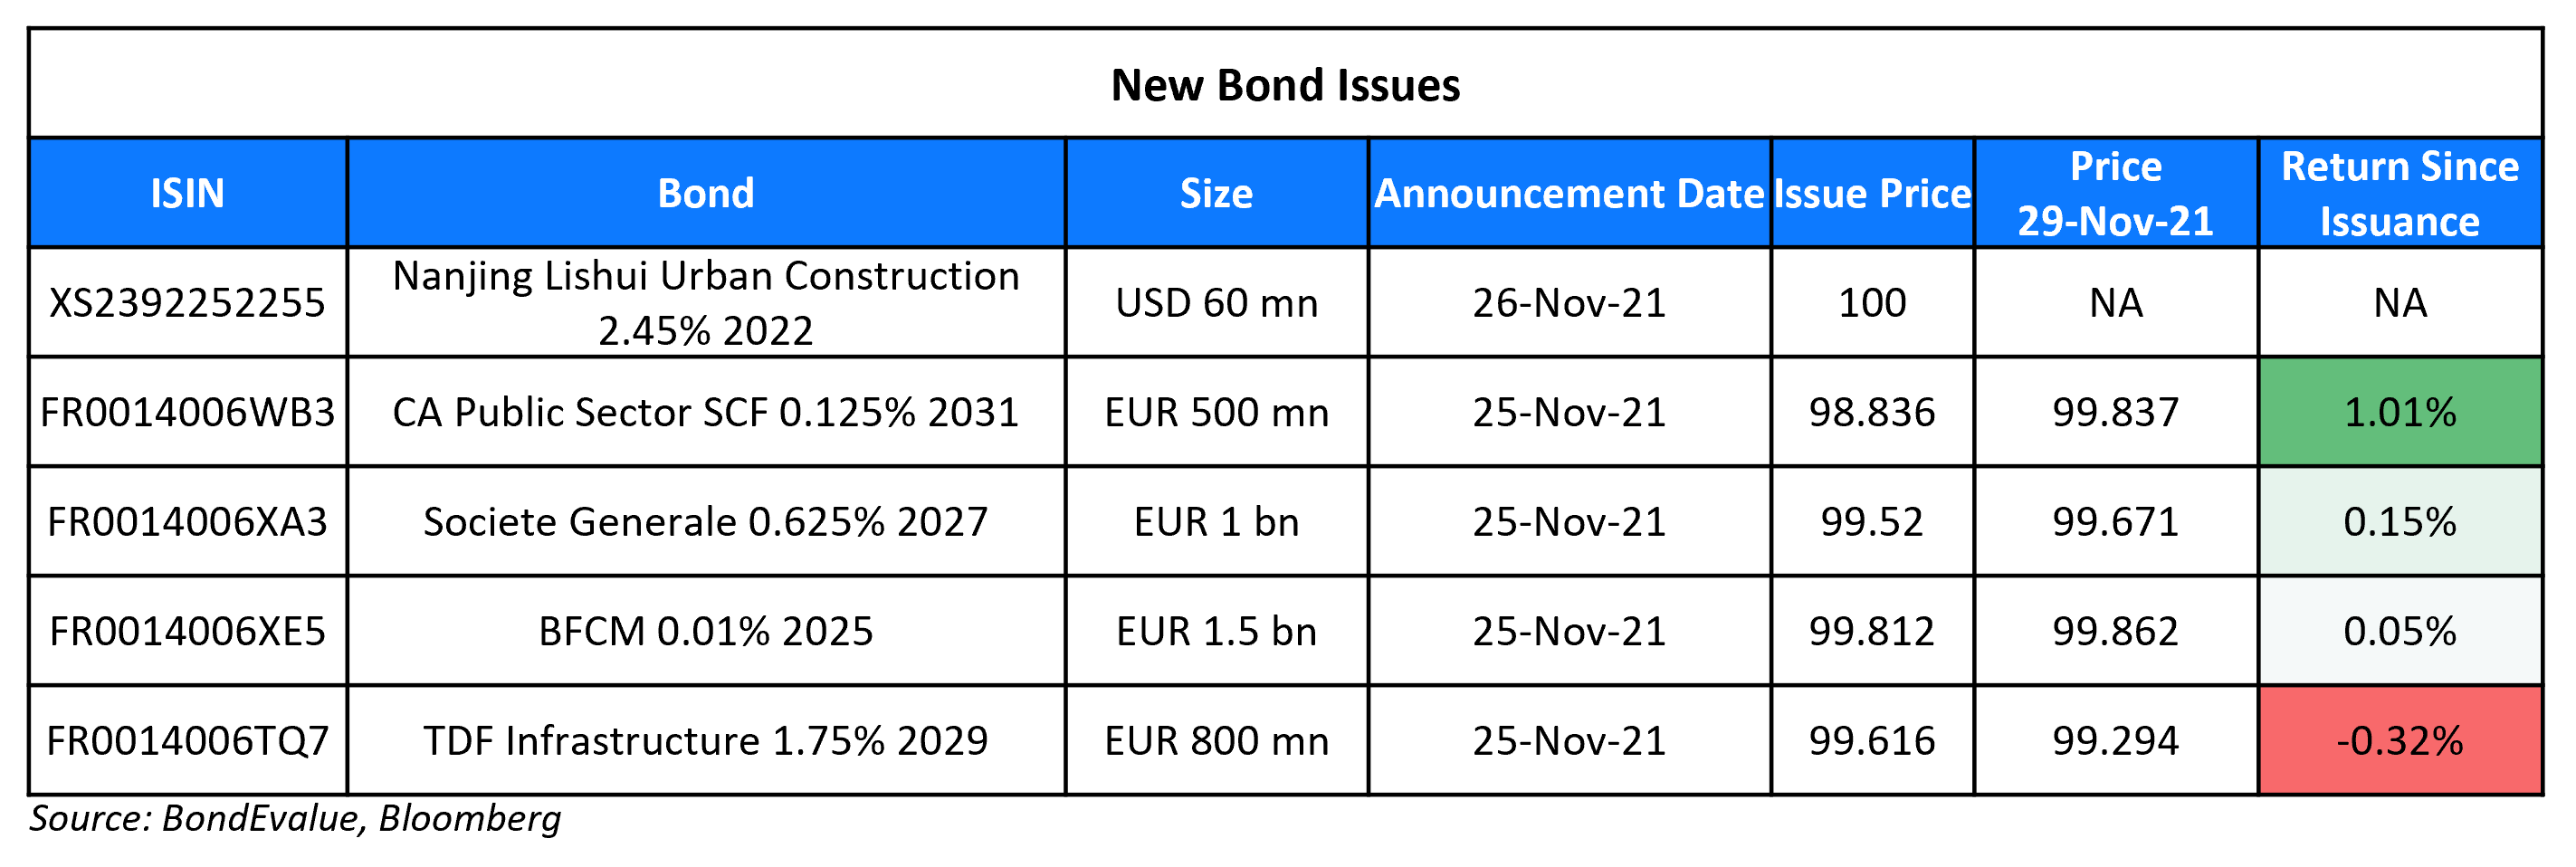 New Bond Issues 29 Nov